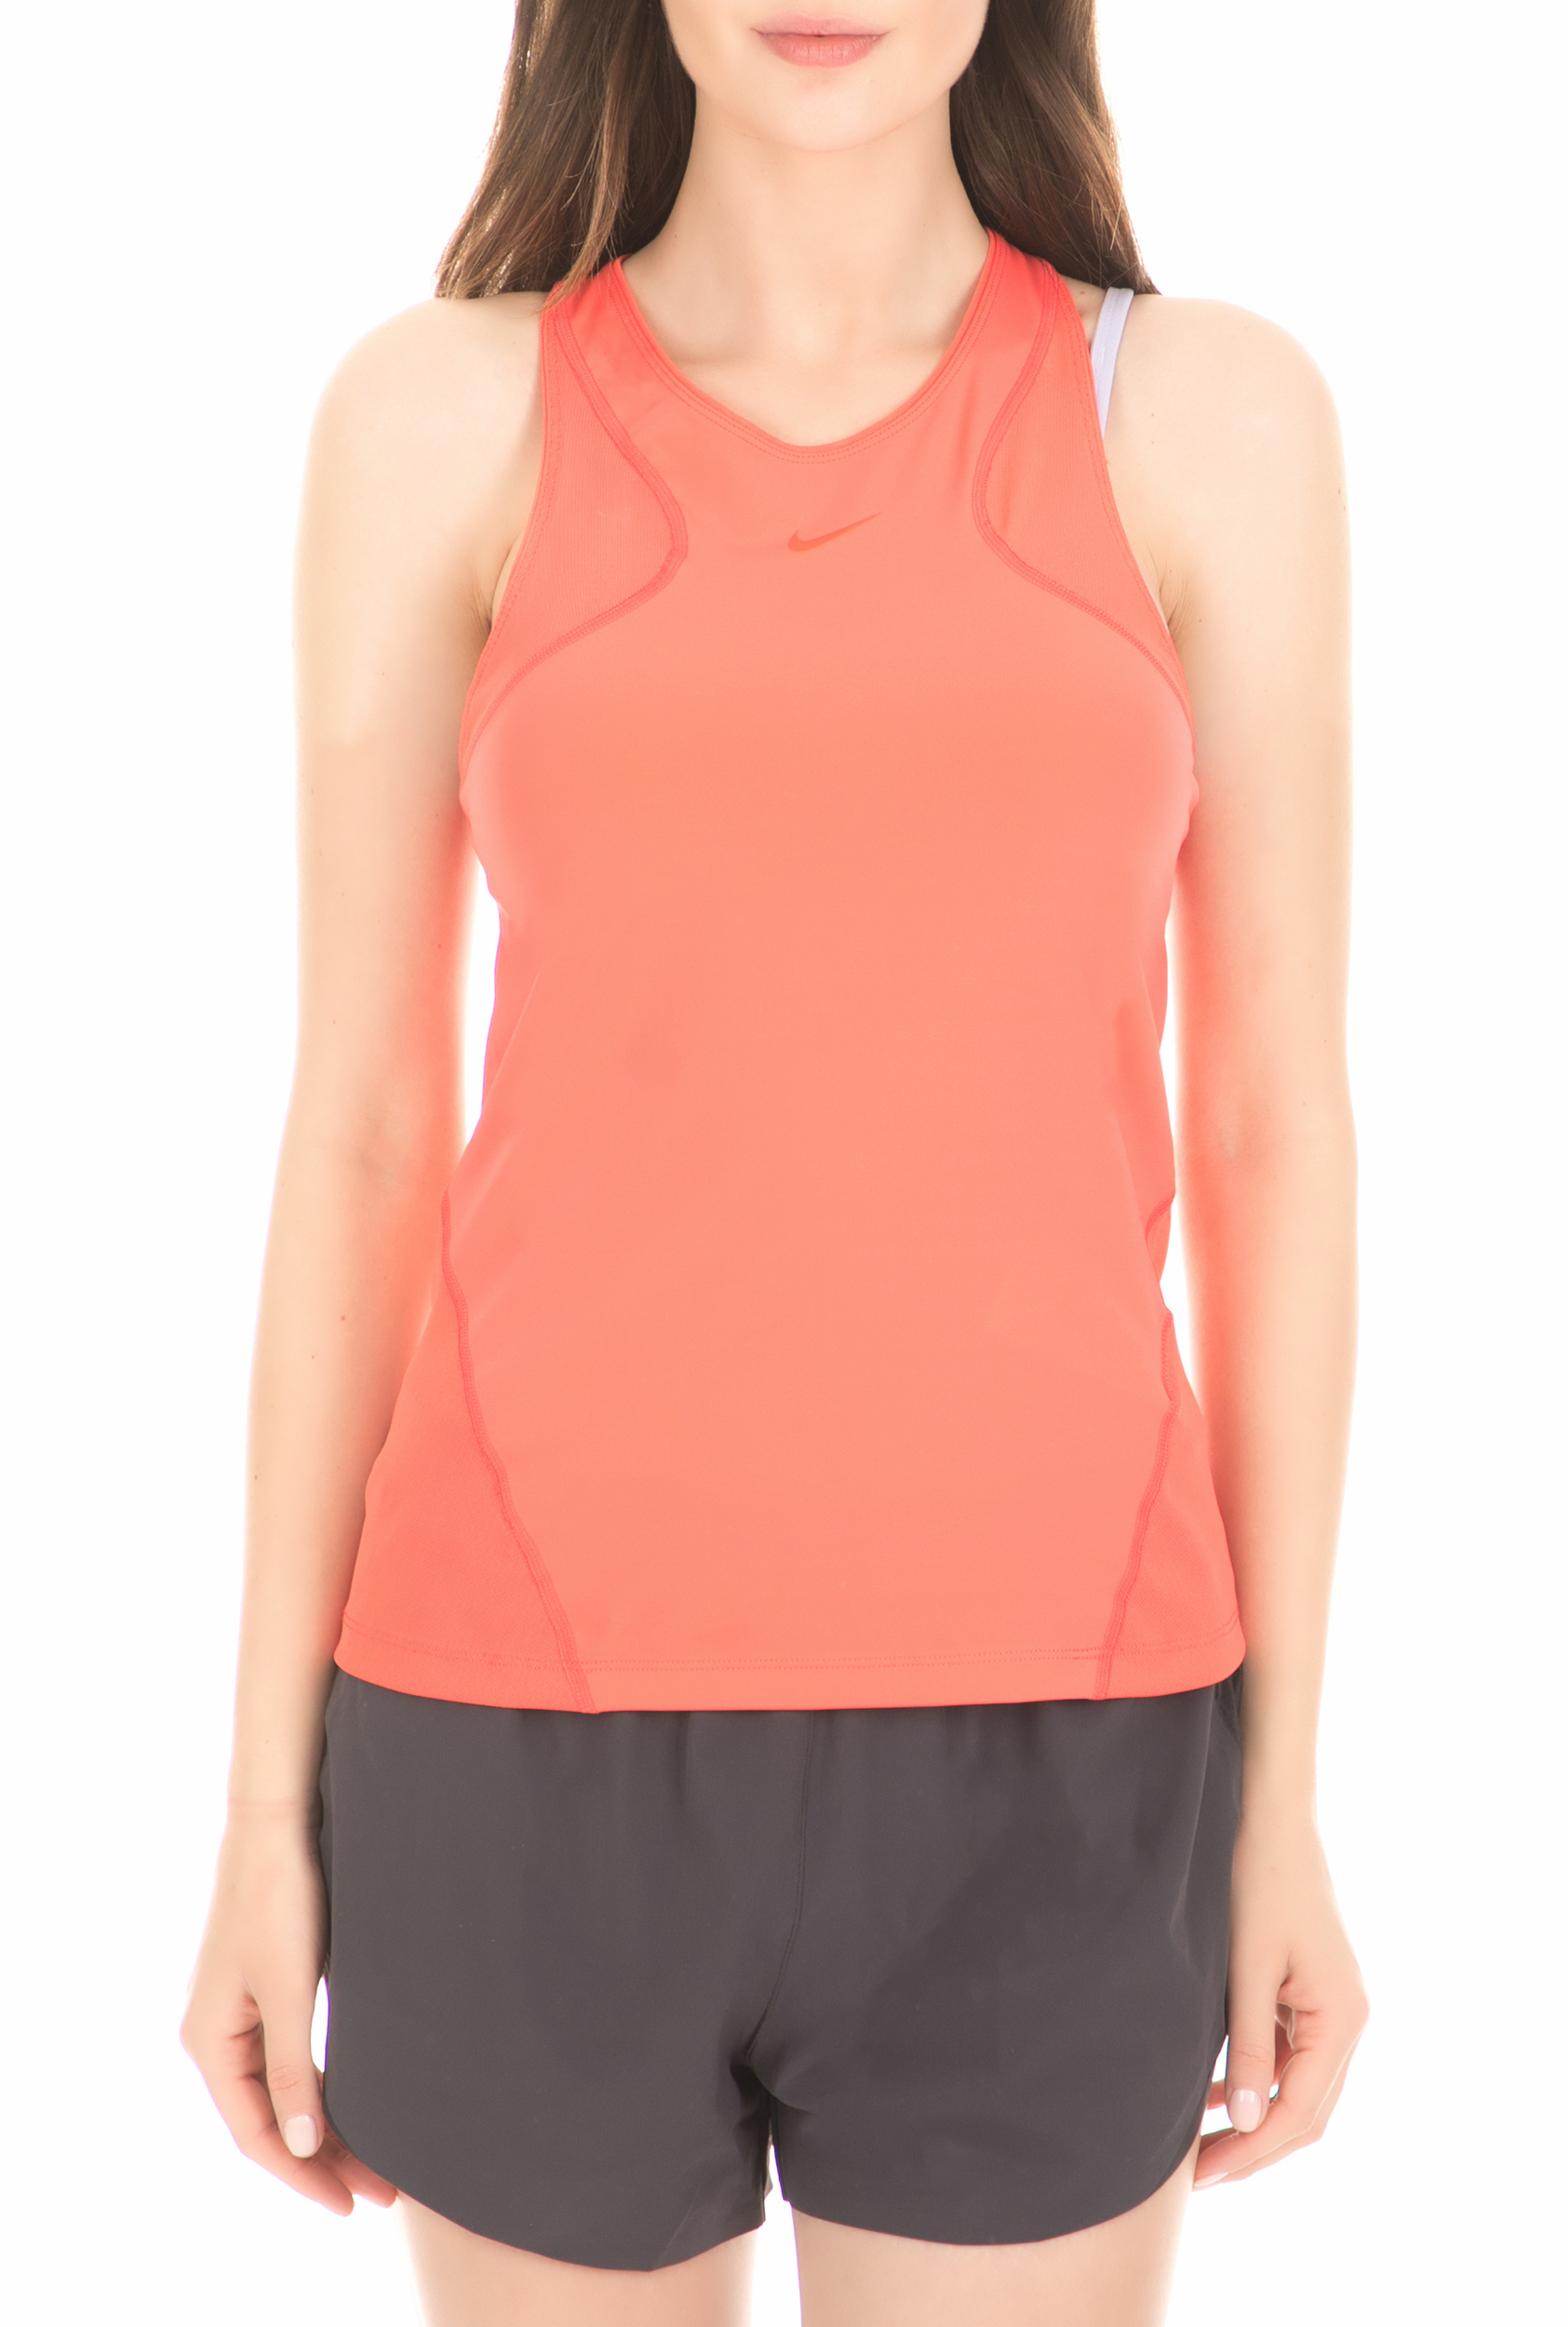 NIKE - Γυναικείο αθλητικό φανελάκι Nike Pro HyperCool πορτοκαλί Γυναικεία/Ρούχα/Αθλητικά/T-shirt-Τοπ